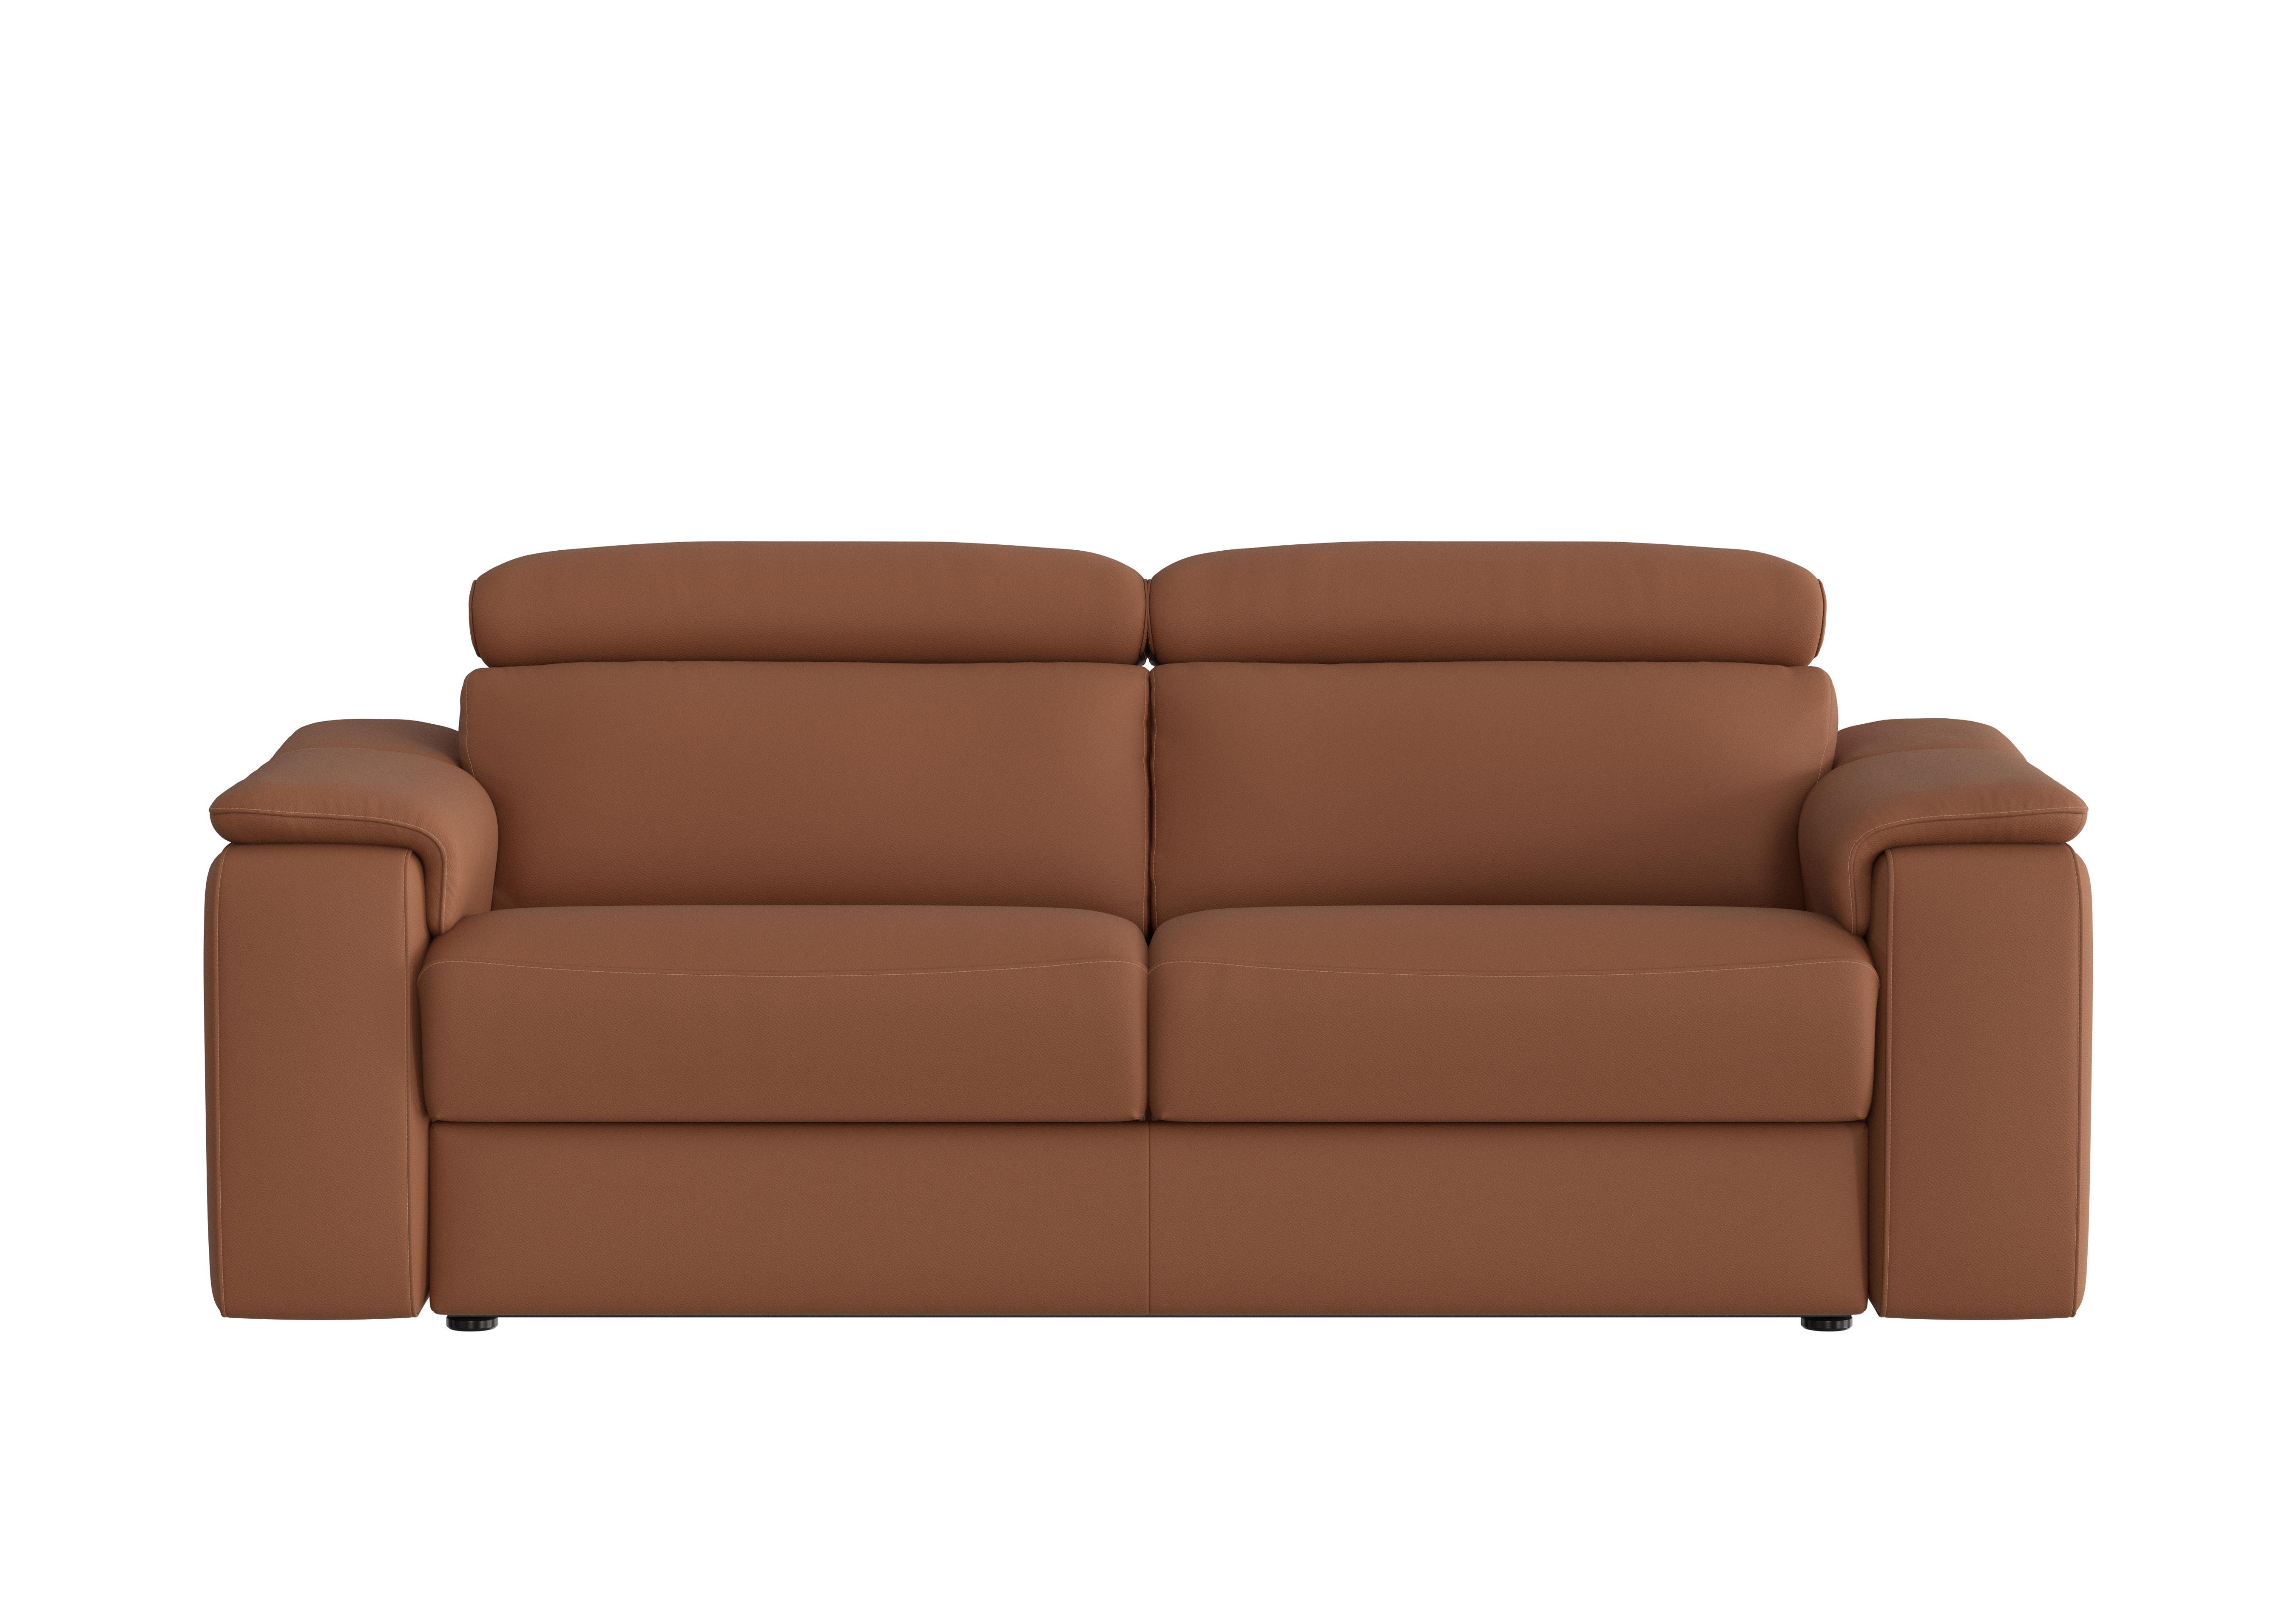 Davide 3 Seater Leather Sofa in 363 Torello Cognac on Furniture Village